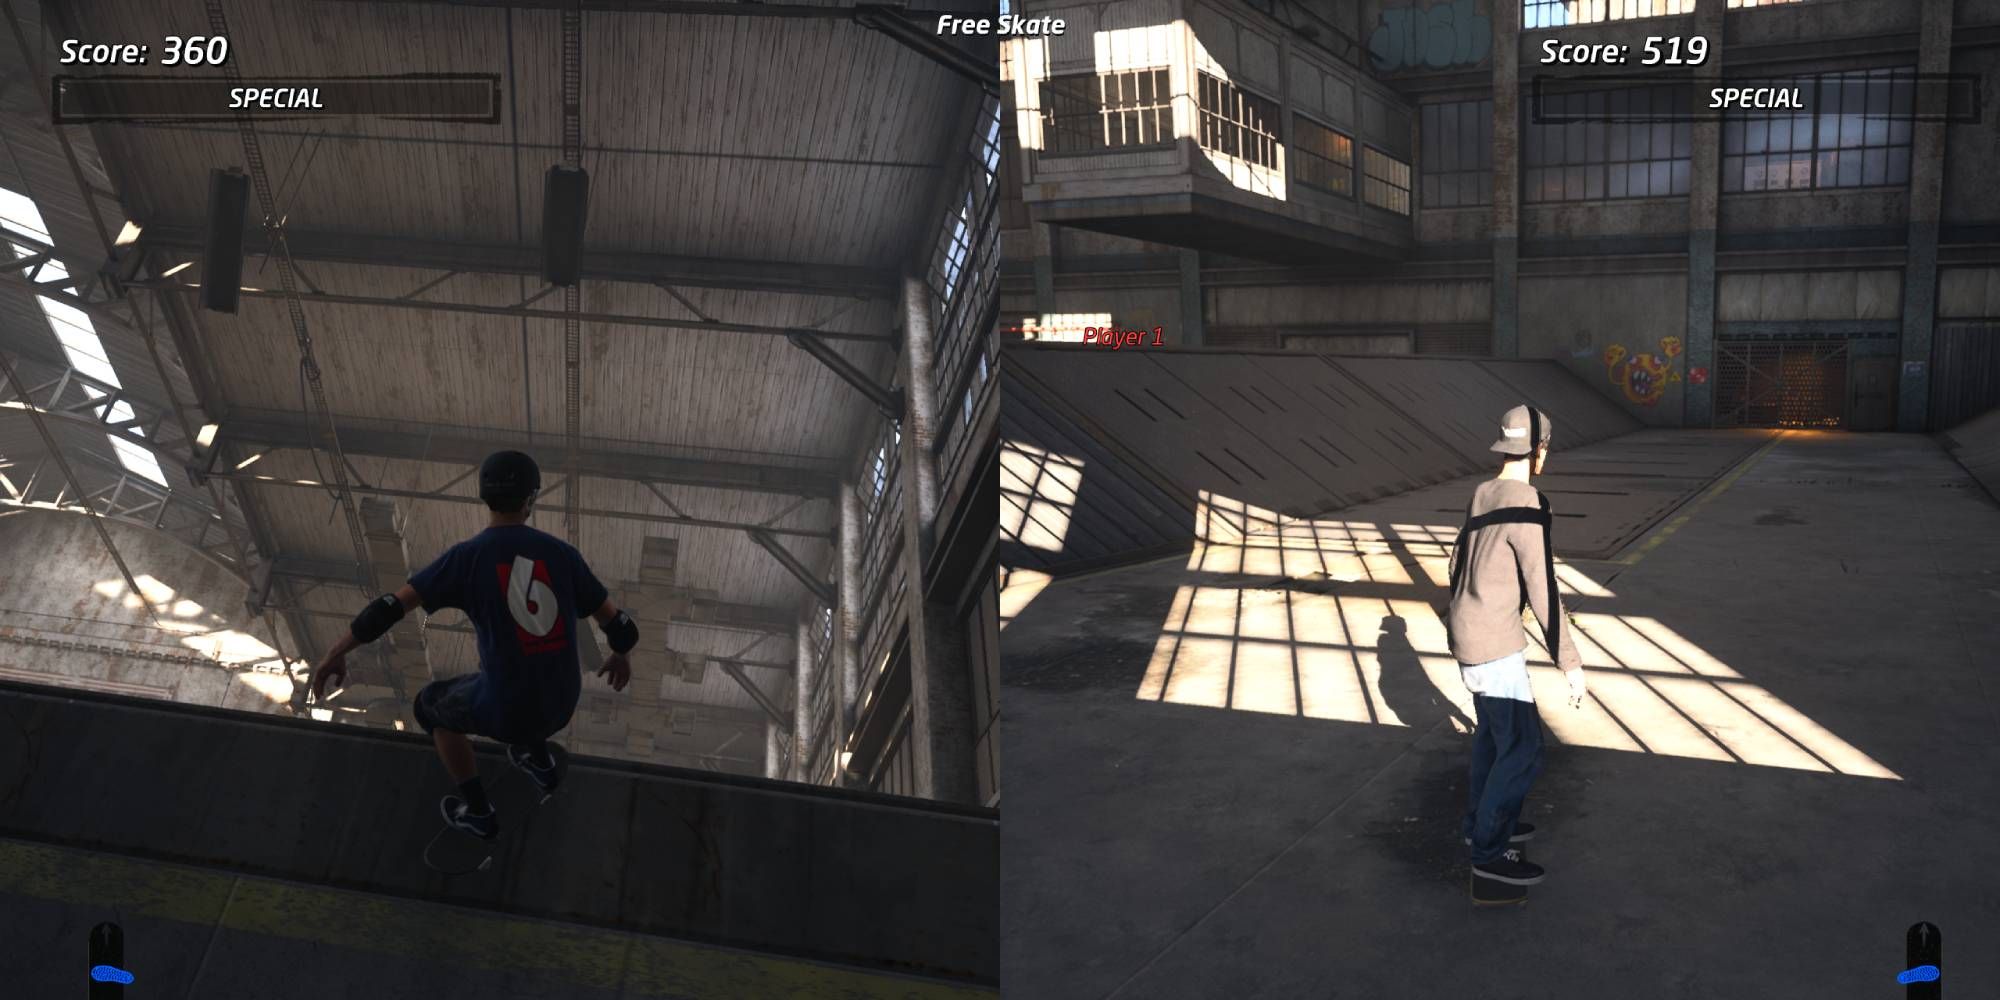 Splitscreen multiplayer action of Tony Hawk and Bob Burnqvist in the Warehouse level of Tony Hawk's Pro Skater 1+2